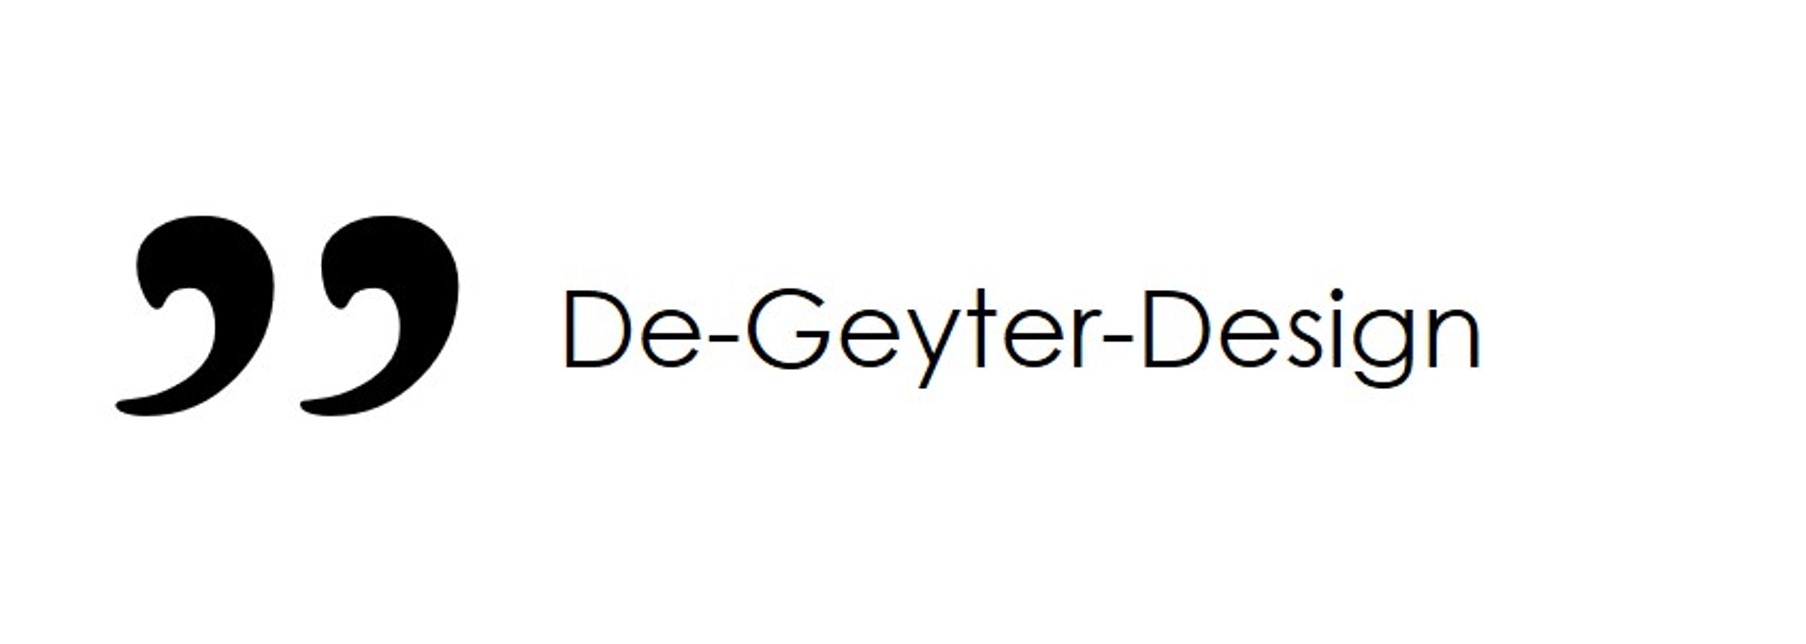 De Geyter Design1